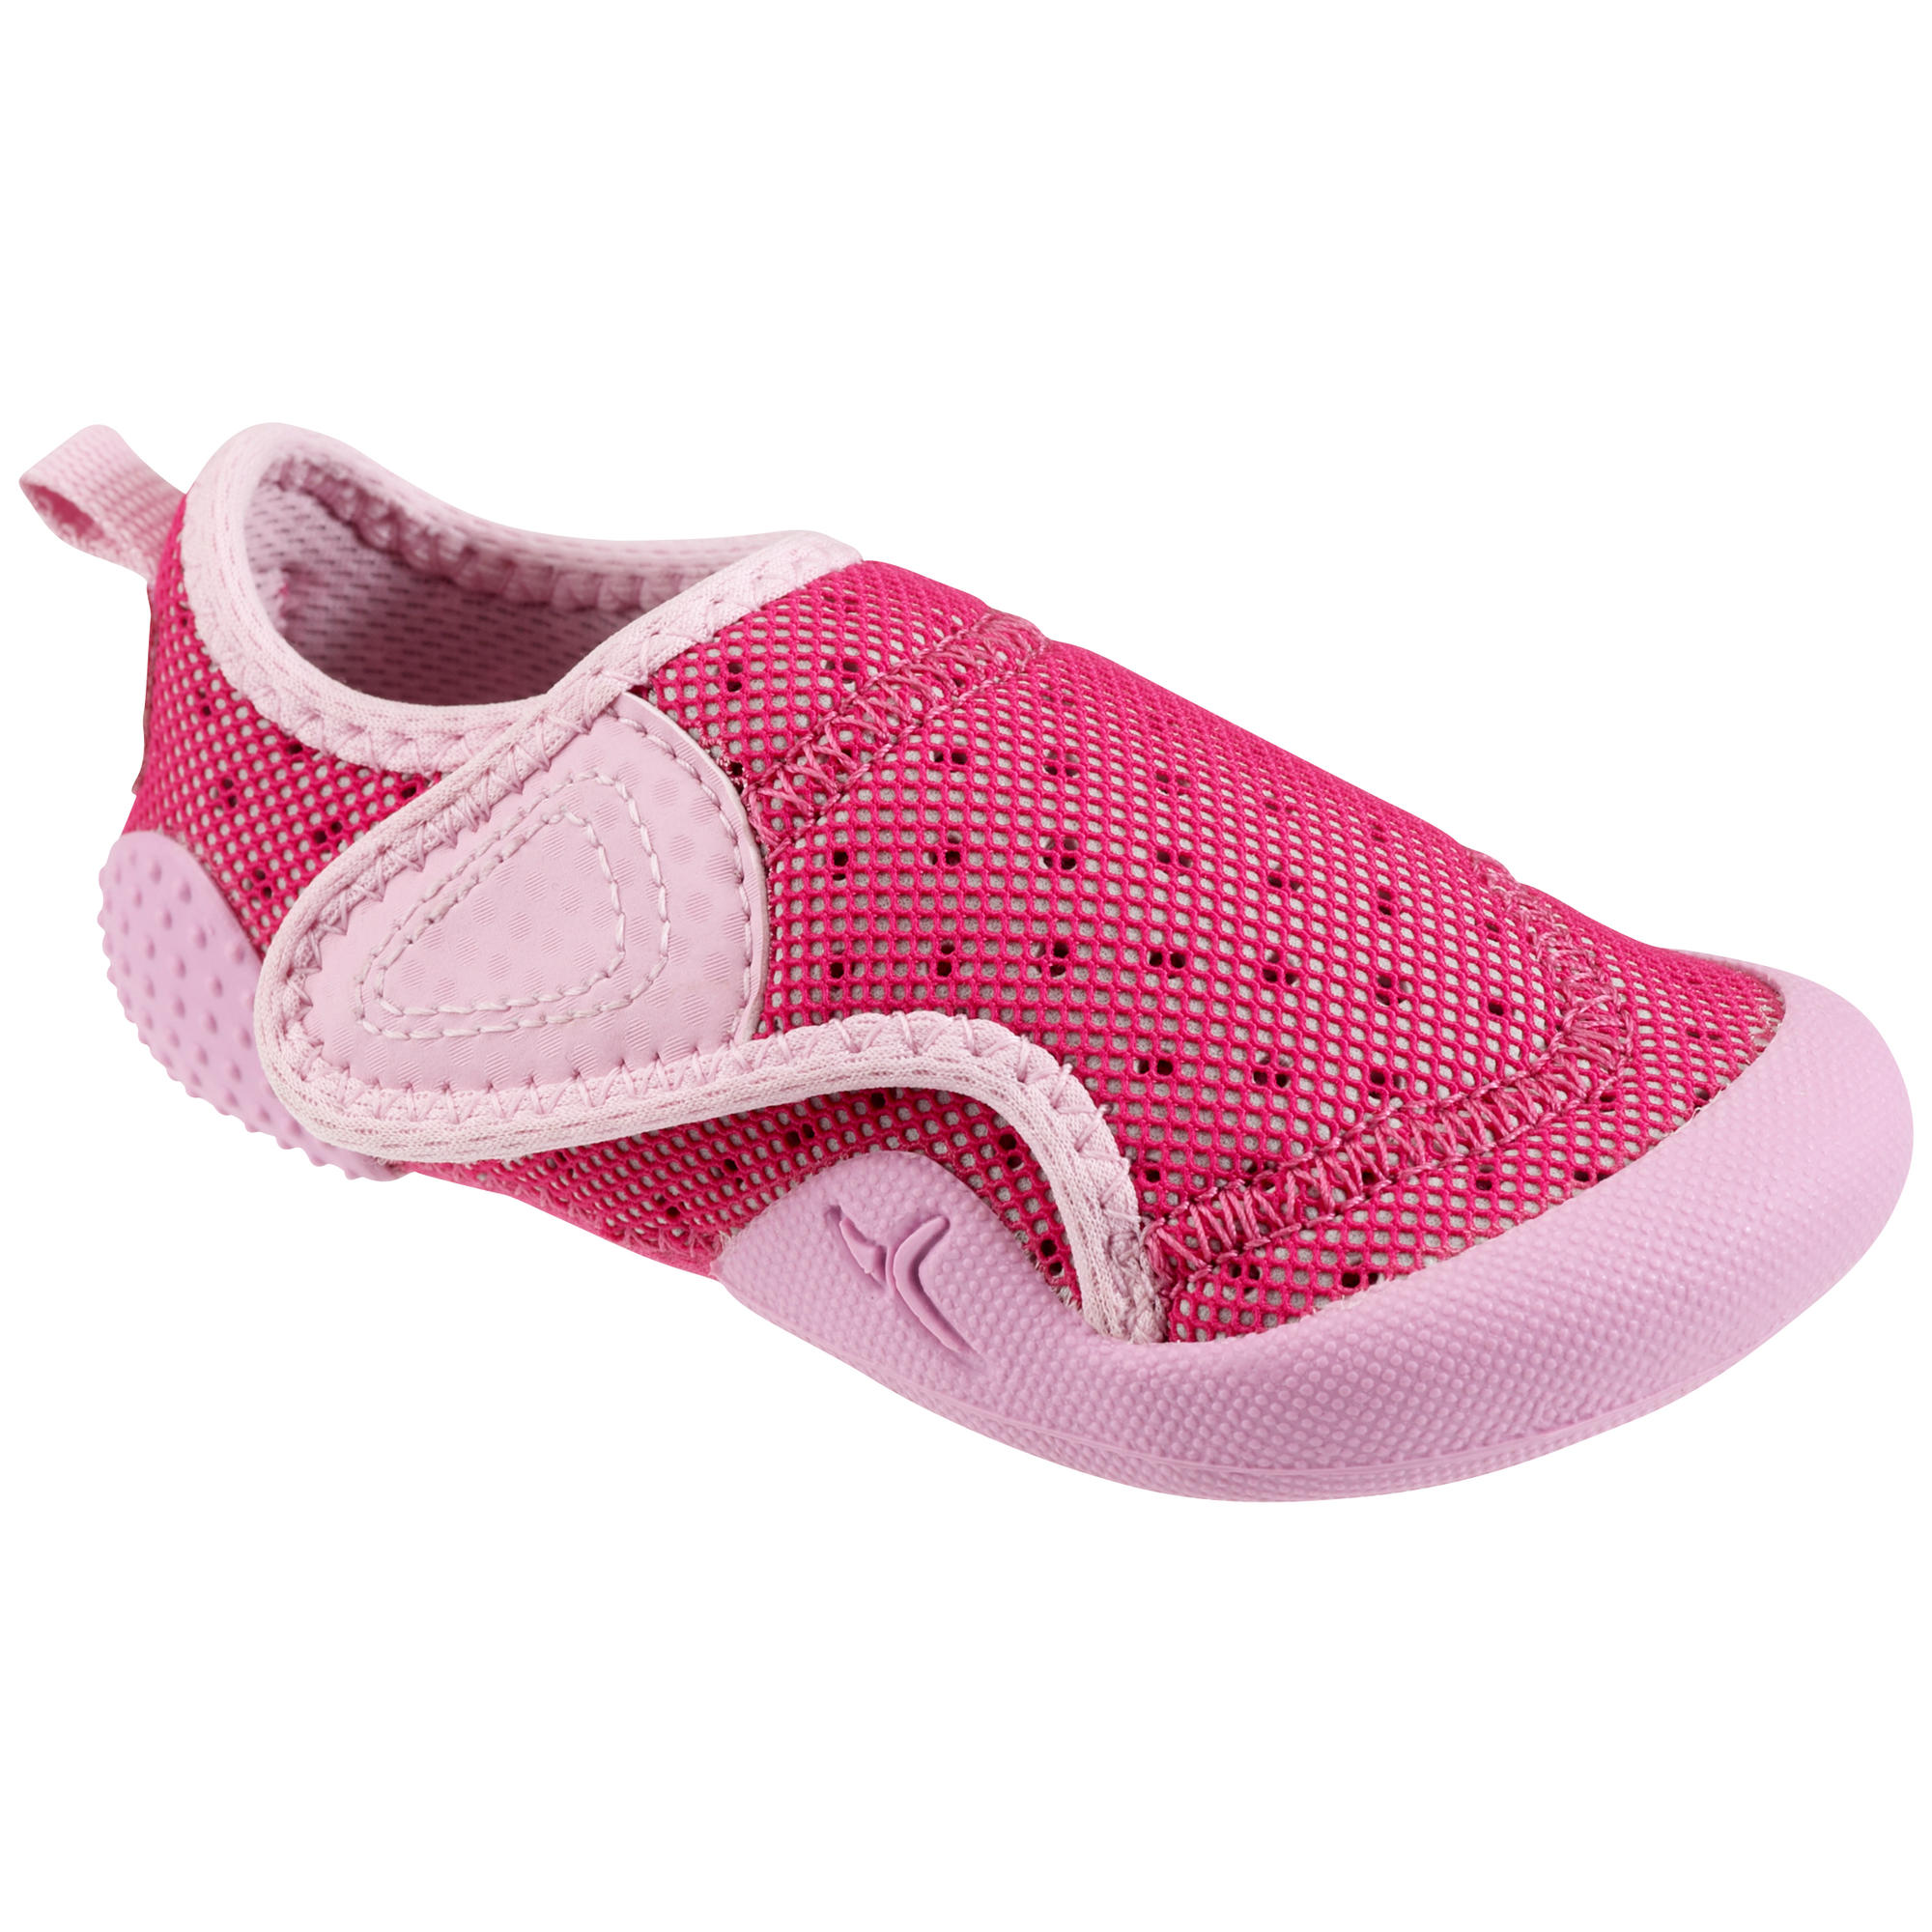 500 Babylight Gym Shoes - Fuchsia Pink 